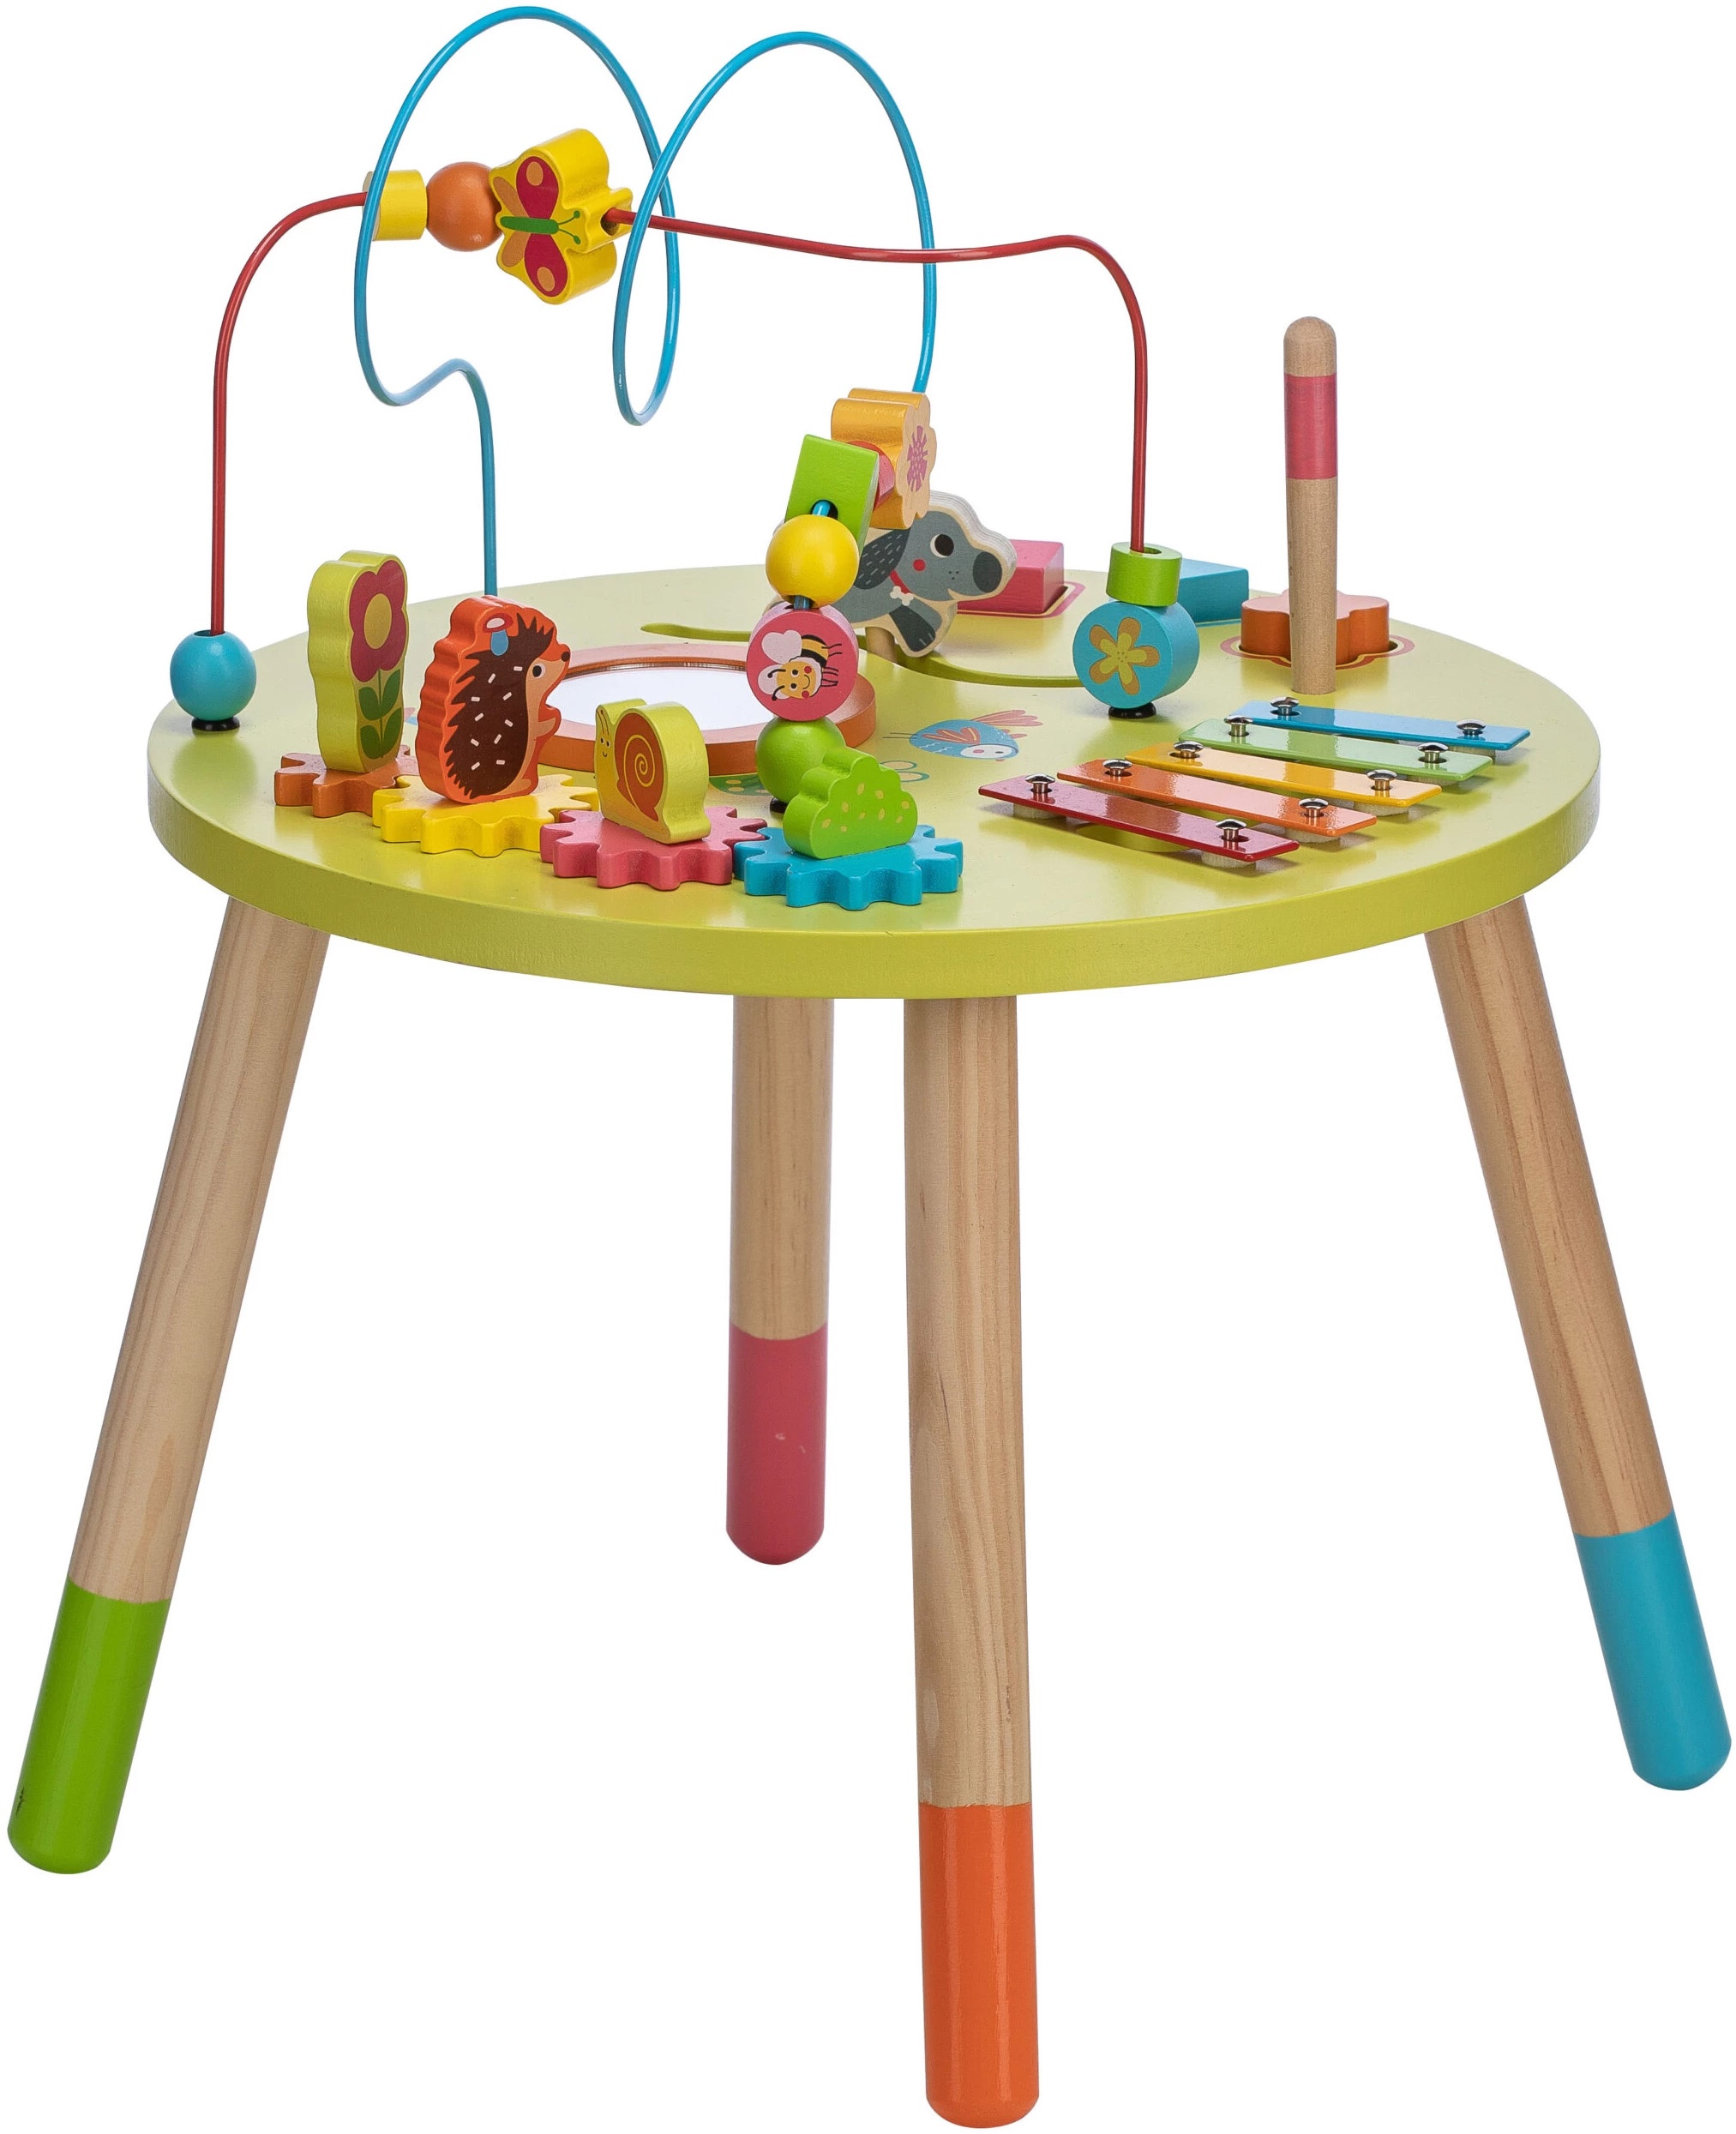 Фотография 4 товарной позиции интернет-магазина детских игрушек www.smarttoys.com.ua Інтерактивний стіл Free2Play дерев`яний Playzone